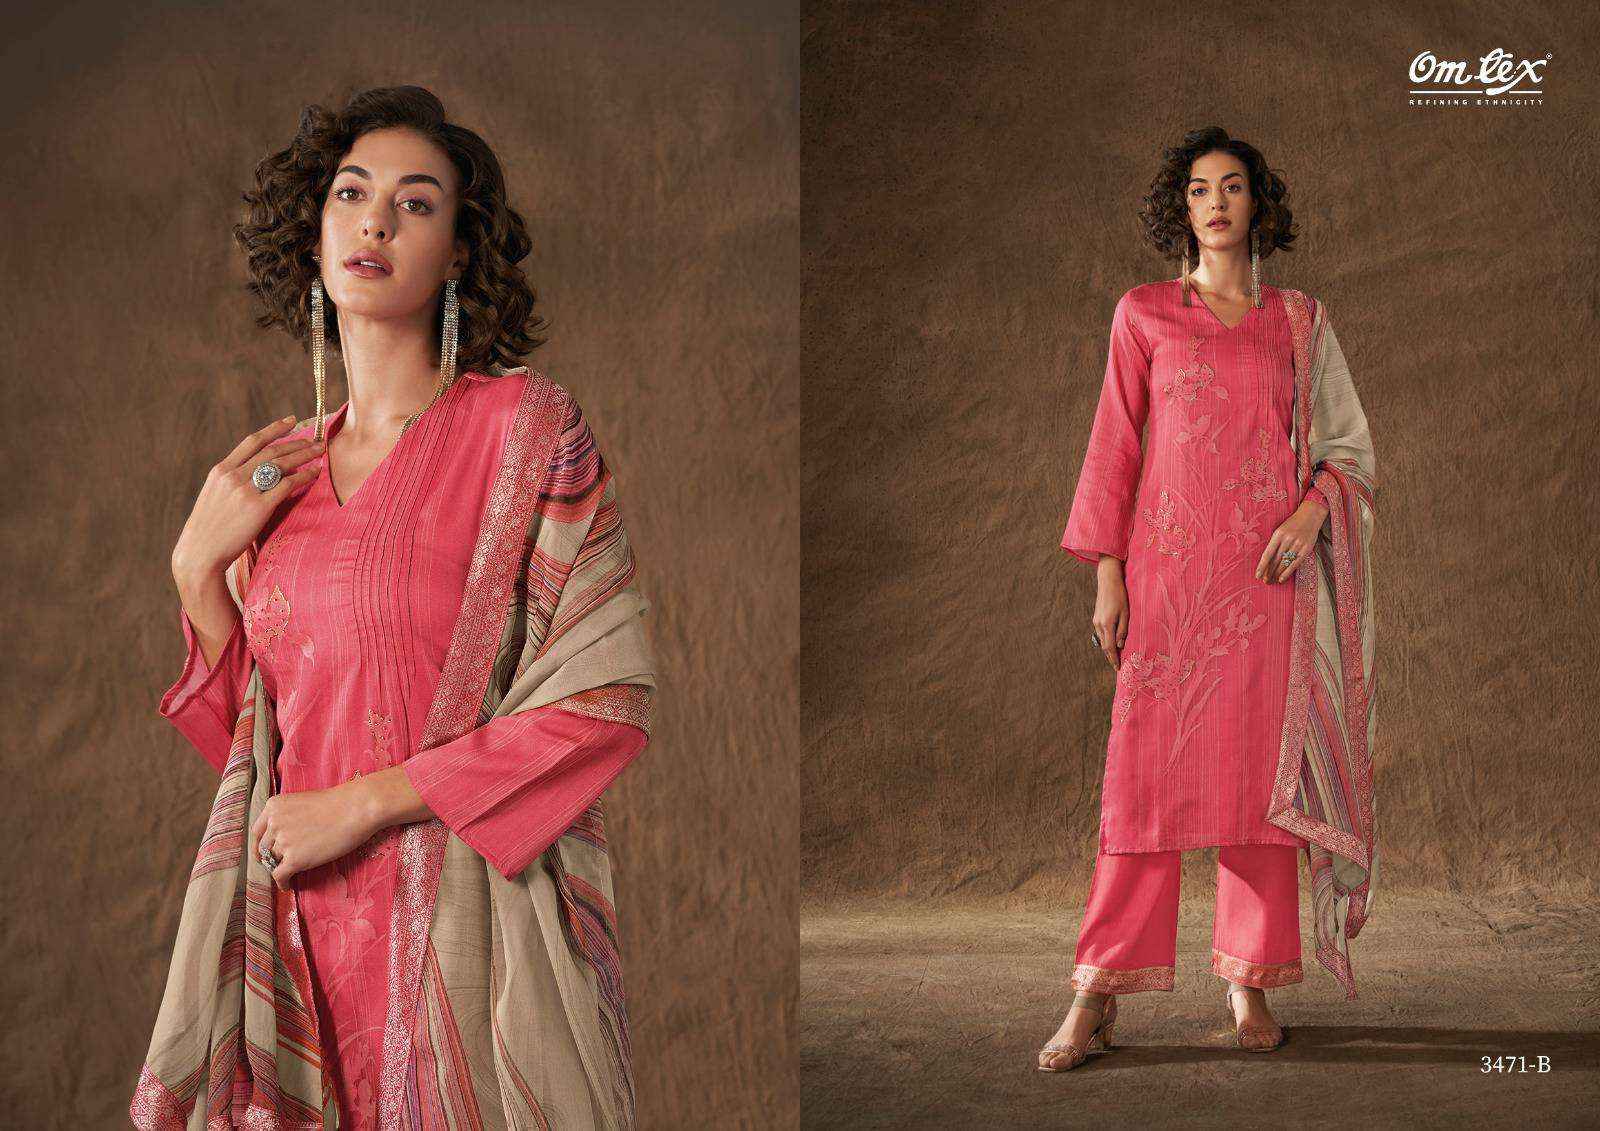 Omtex Shreya Canvas Satin Dress Material (4 Pc Catalog)